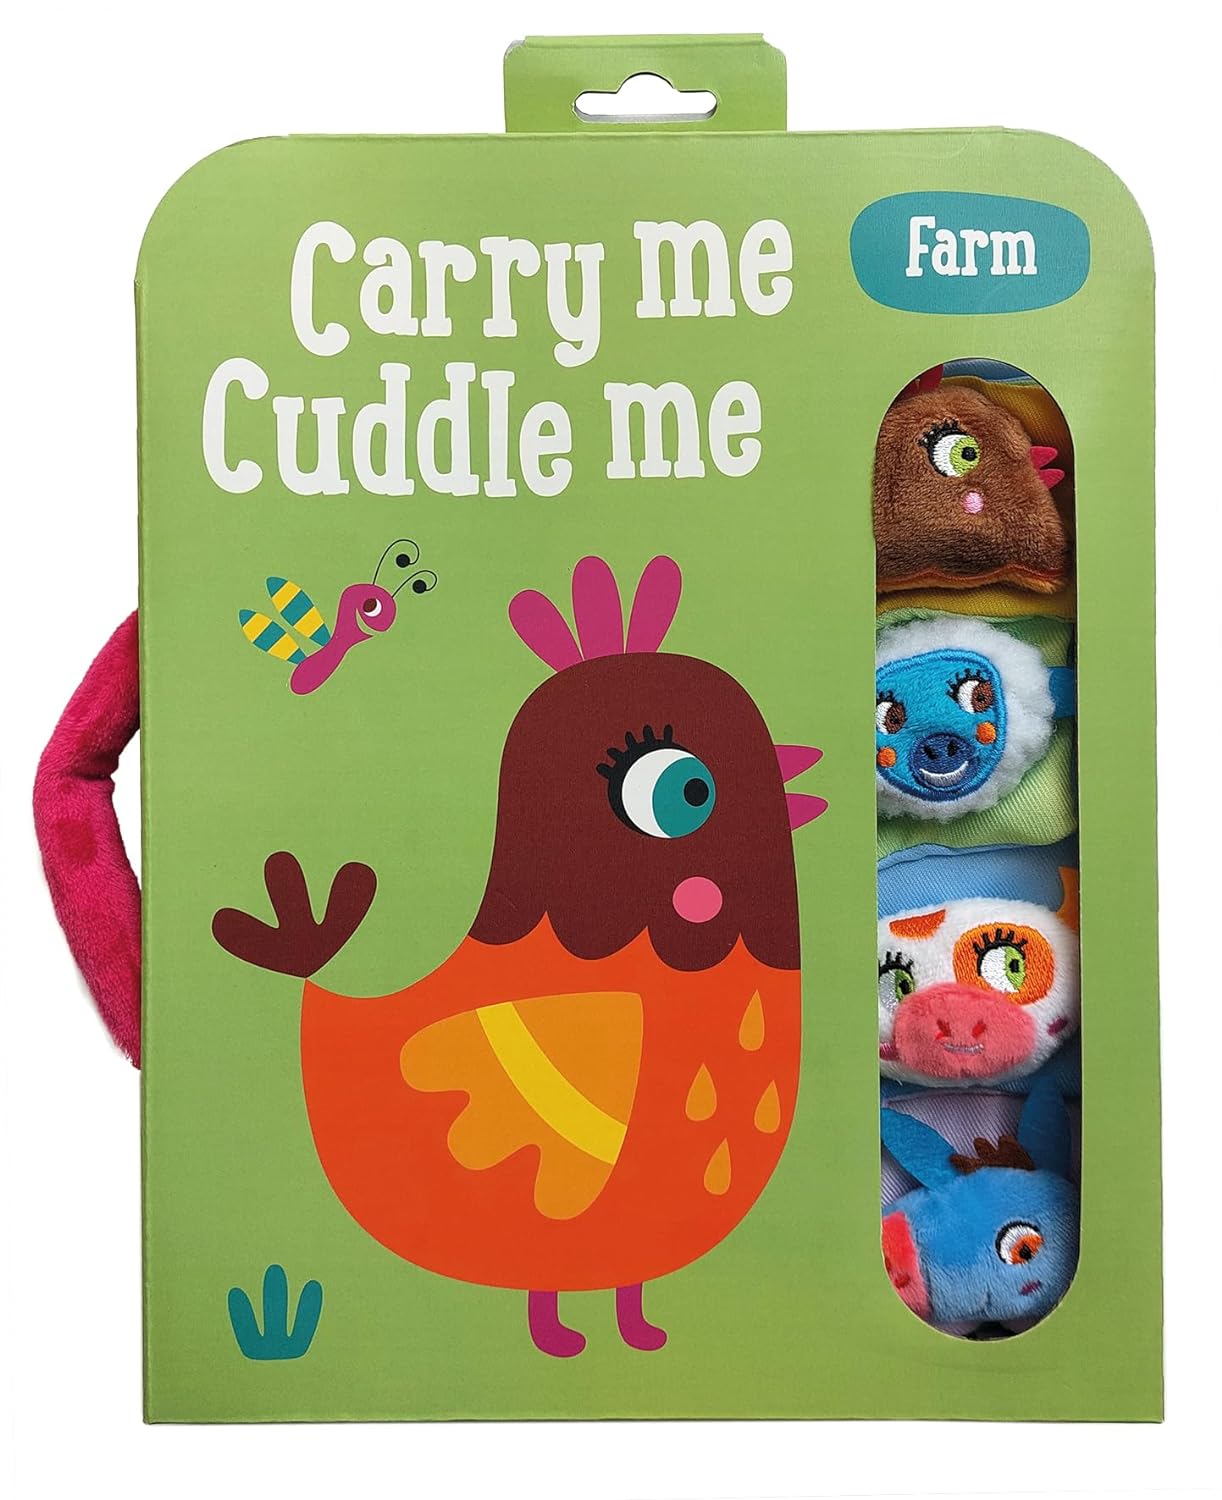 Carry Me Cuddle Me: Farm